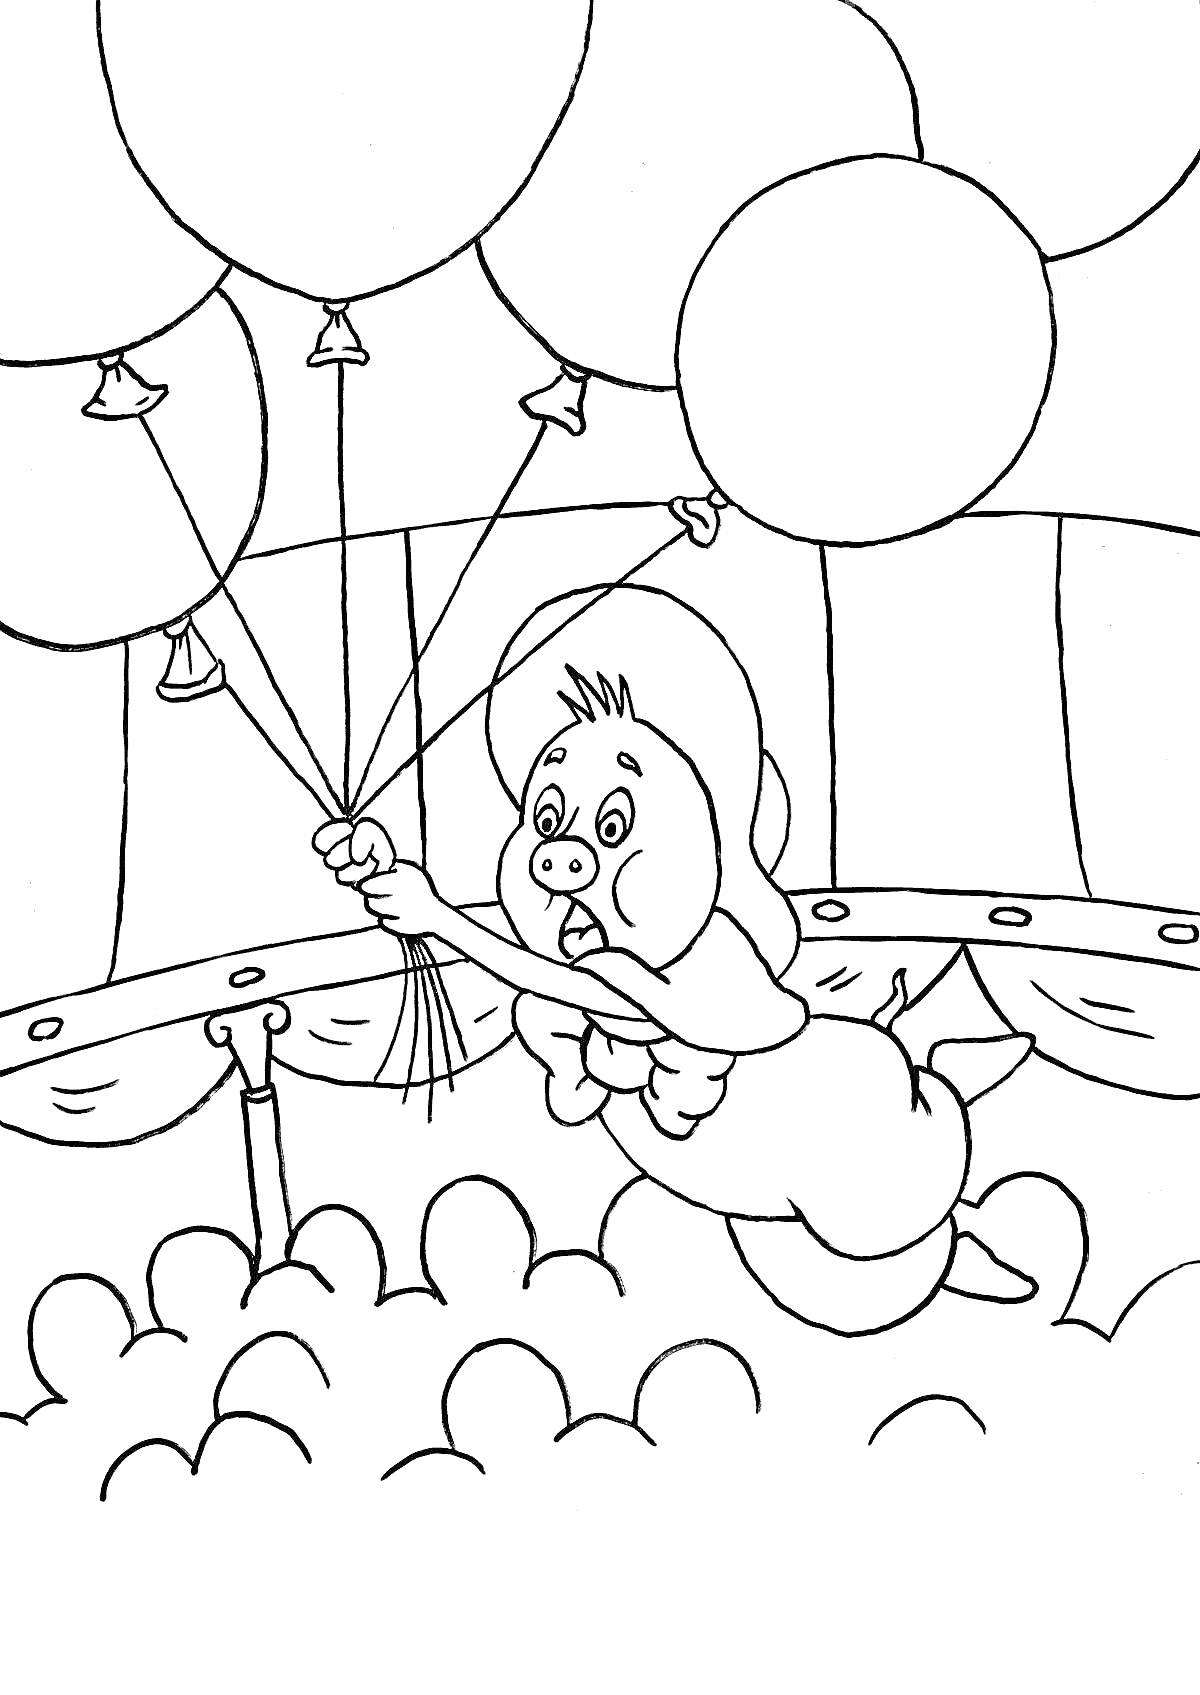 Поросёнок Фунтик, летающий на воздушных шарах на арене цирка